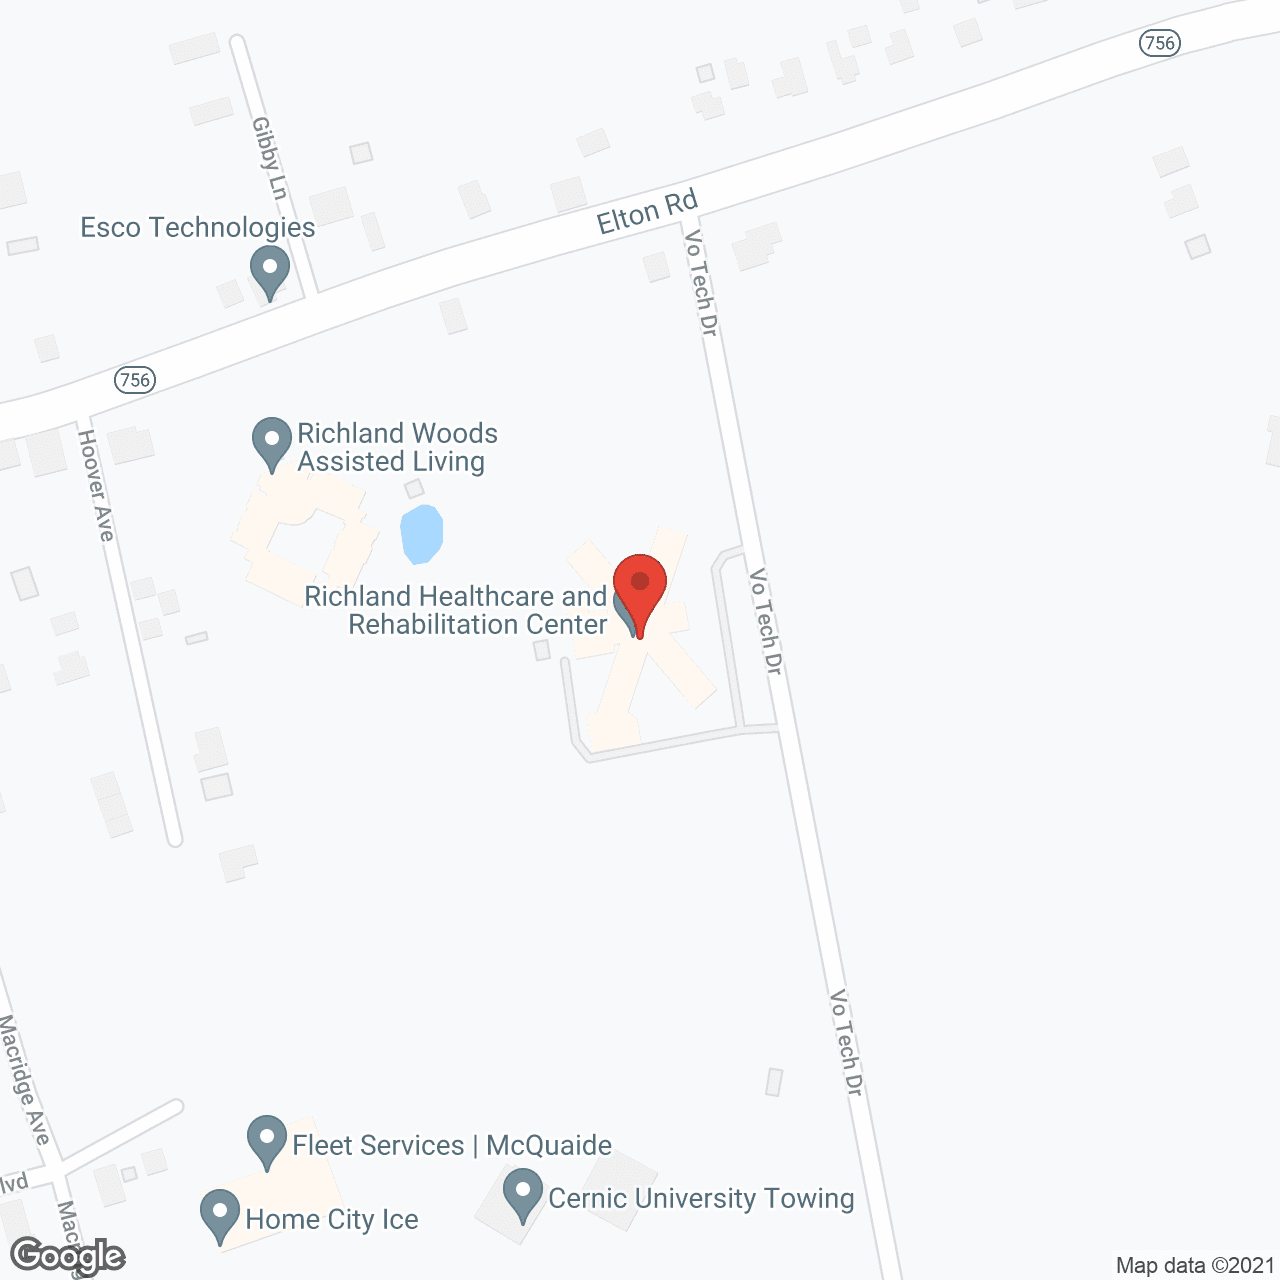 Golden LivingCenter - Richland in google map